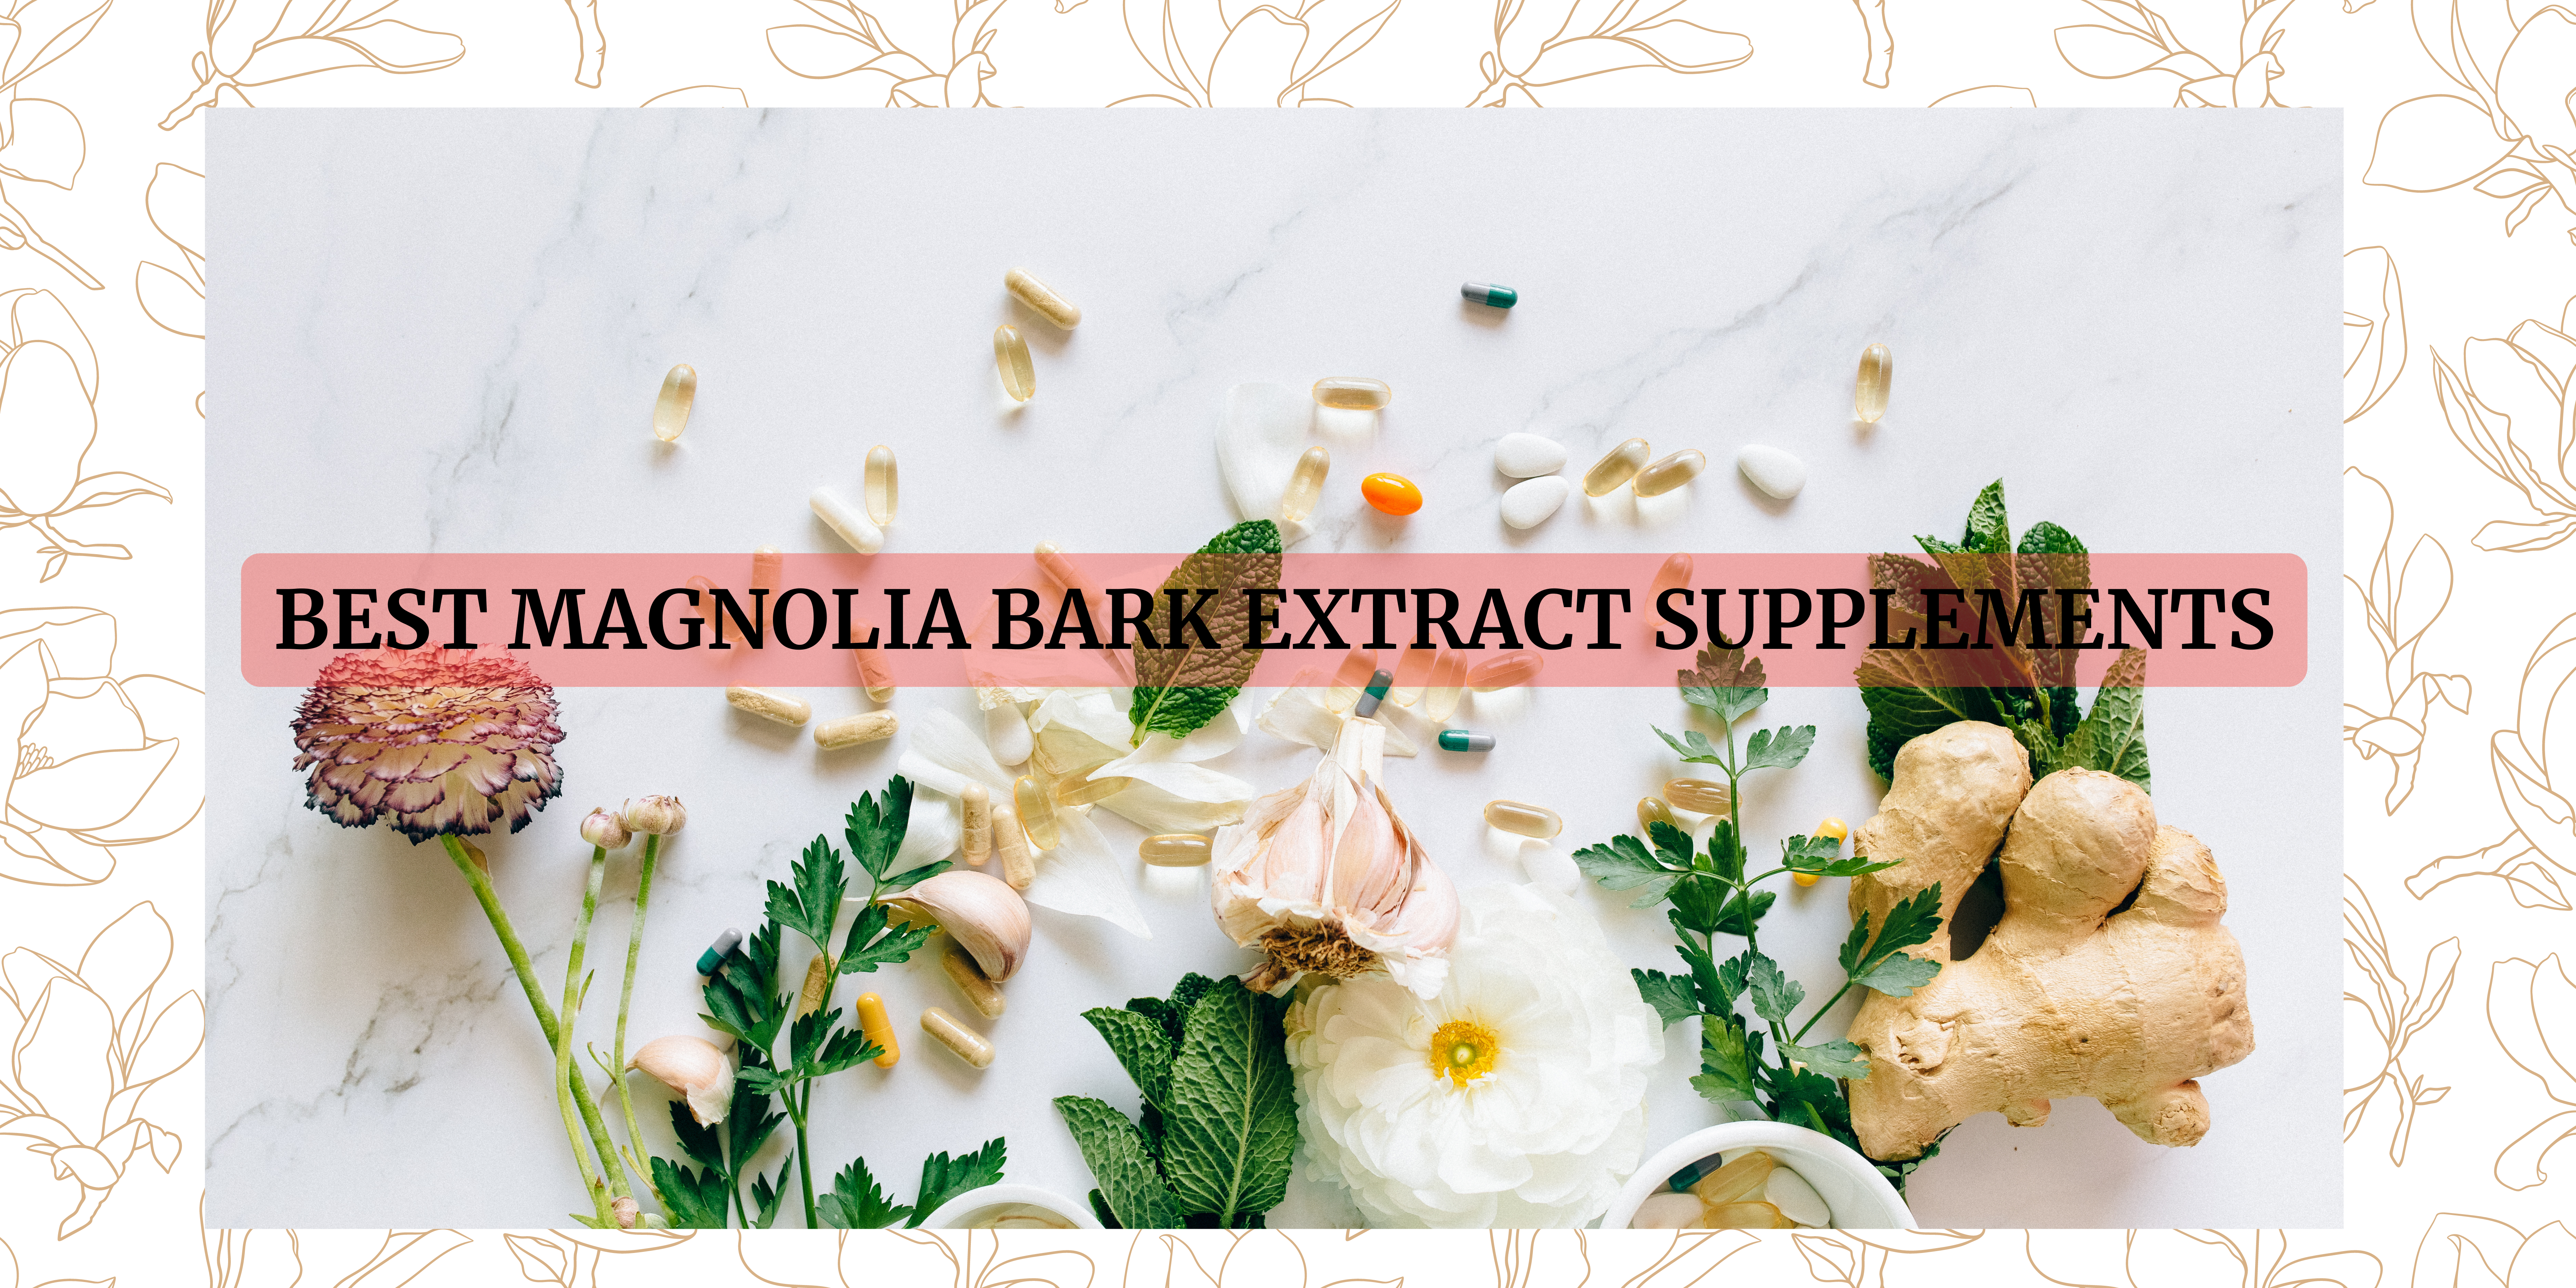 magnolia bark extract supplements in India